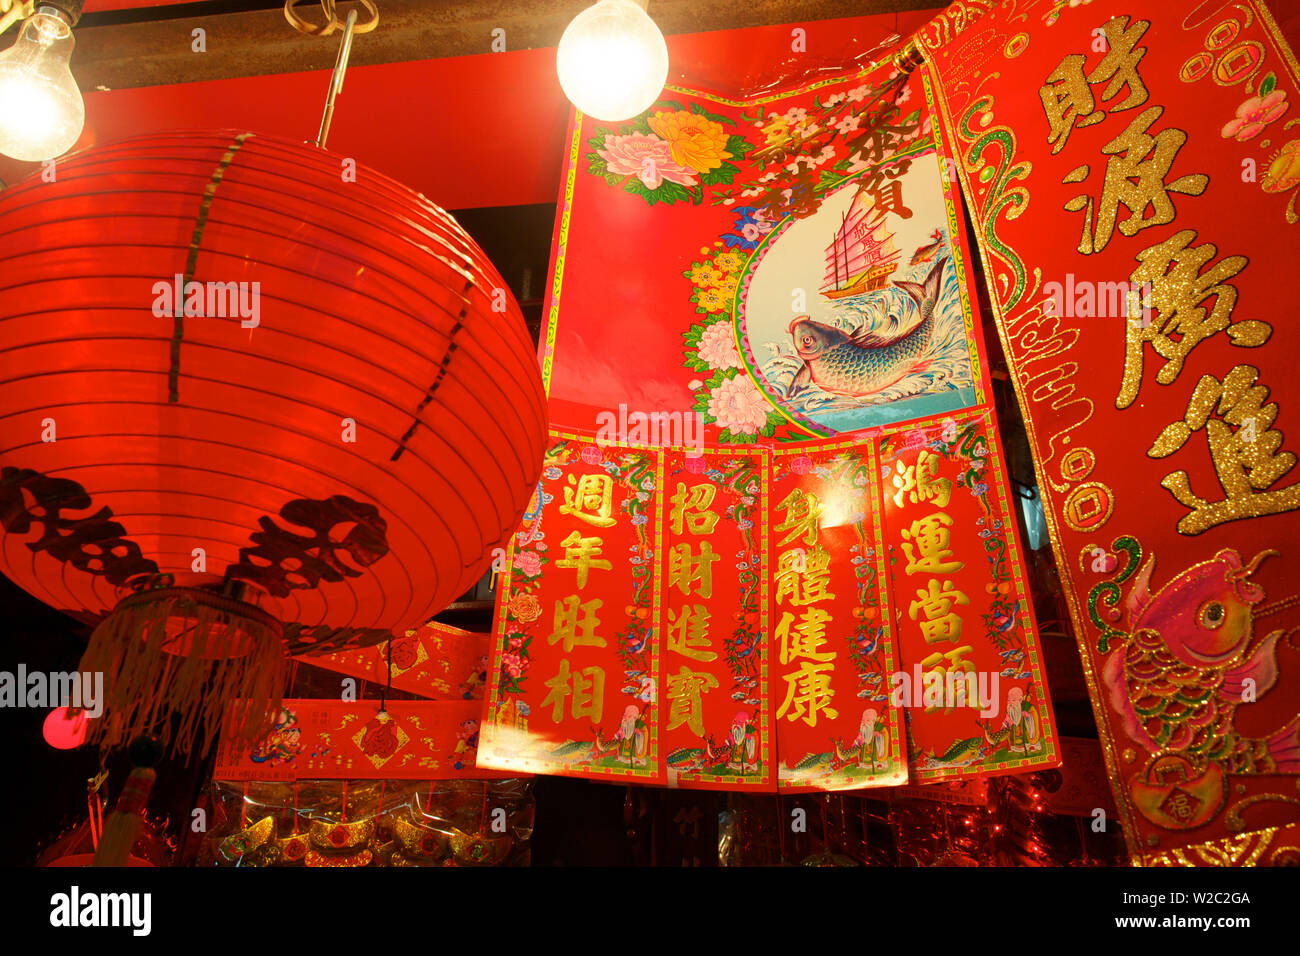 Buona fortuna Poster e lanterna, Hong Kong, Cina, Sud-est asiatico, Foto Stock